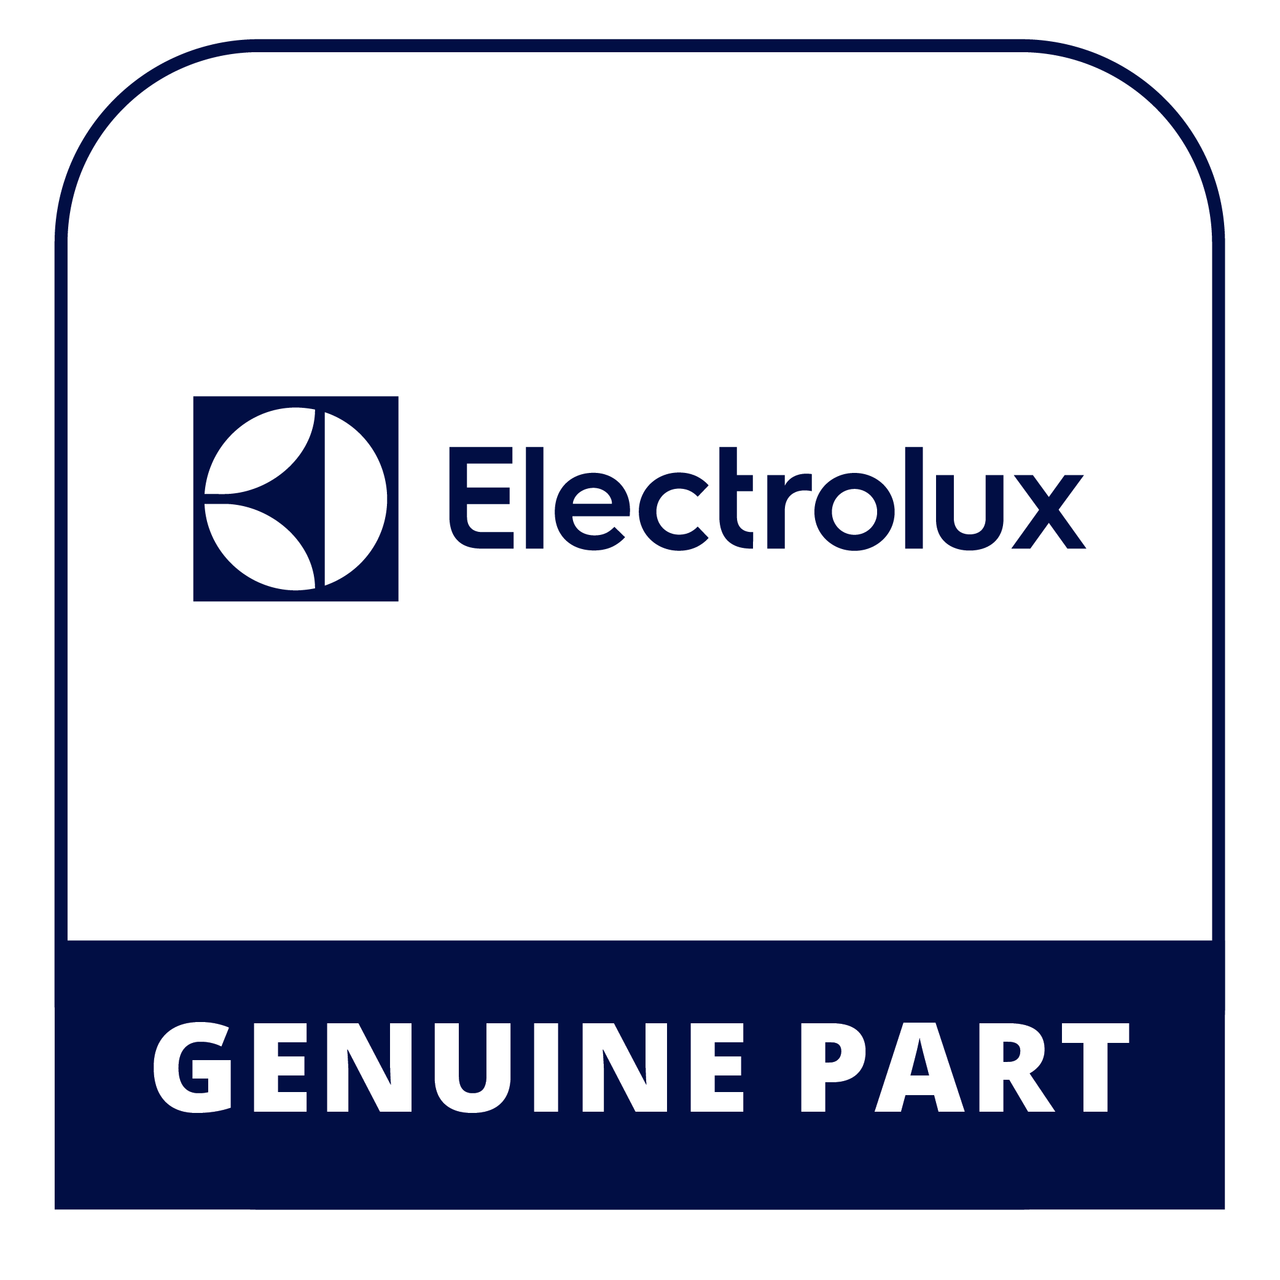 Frigidaire - Electrolux 5304522606 Door Reversal Kit - Genuine Electrolux Part